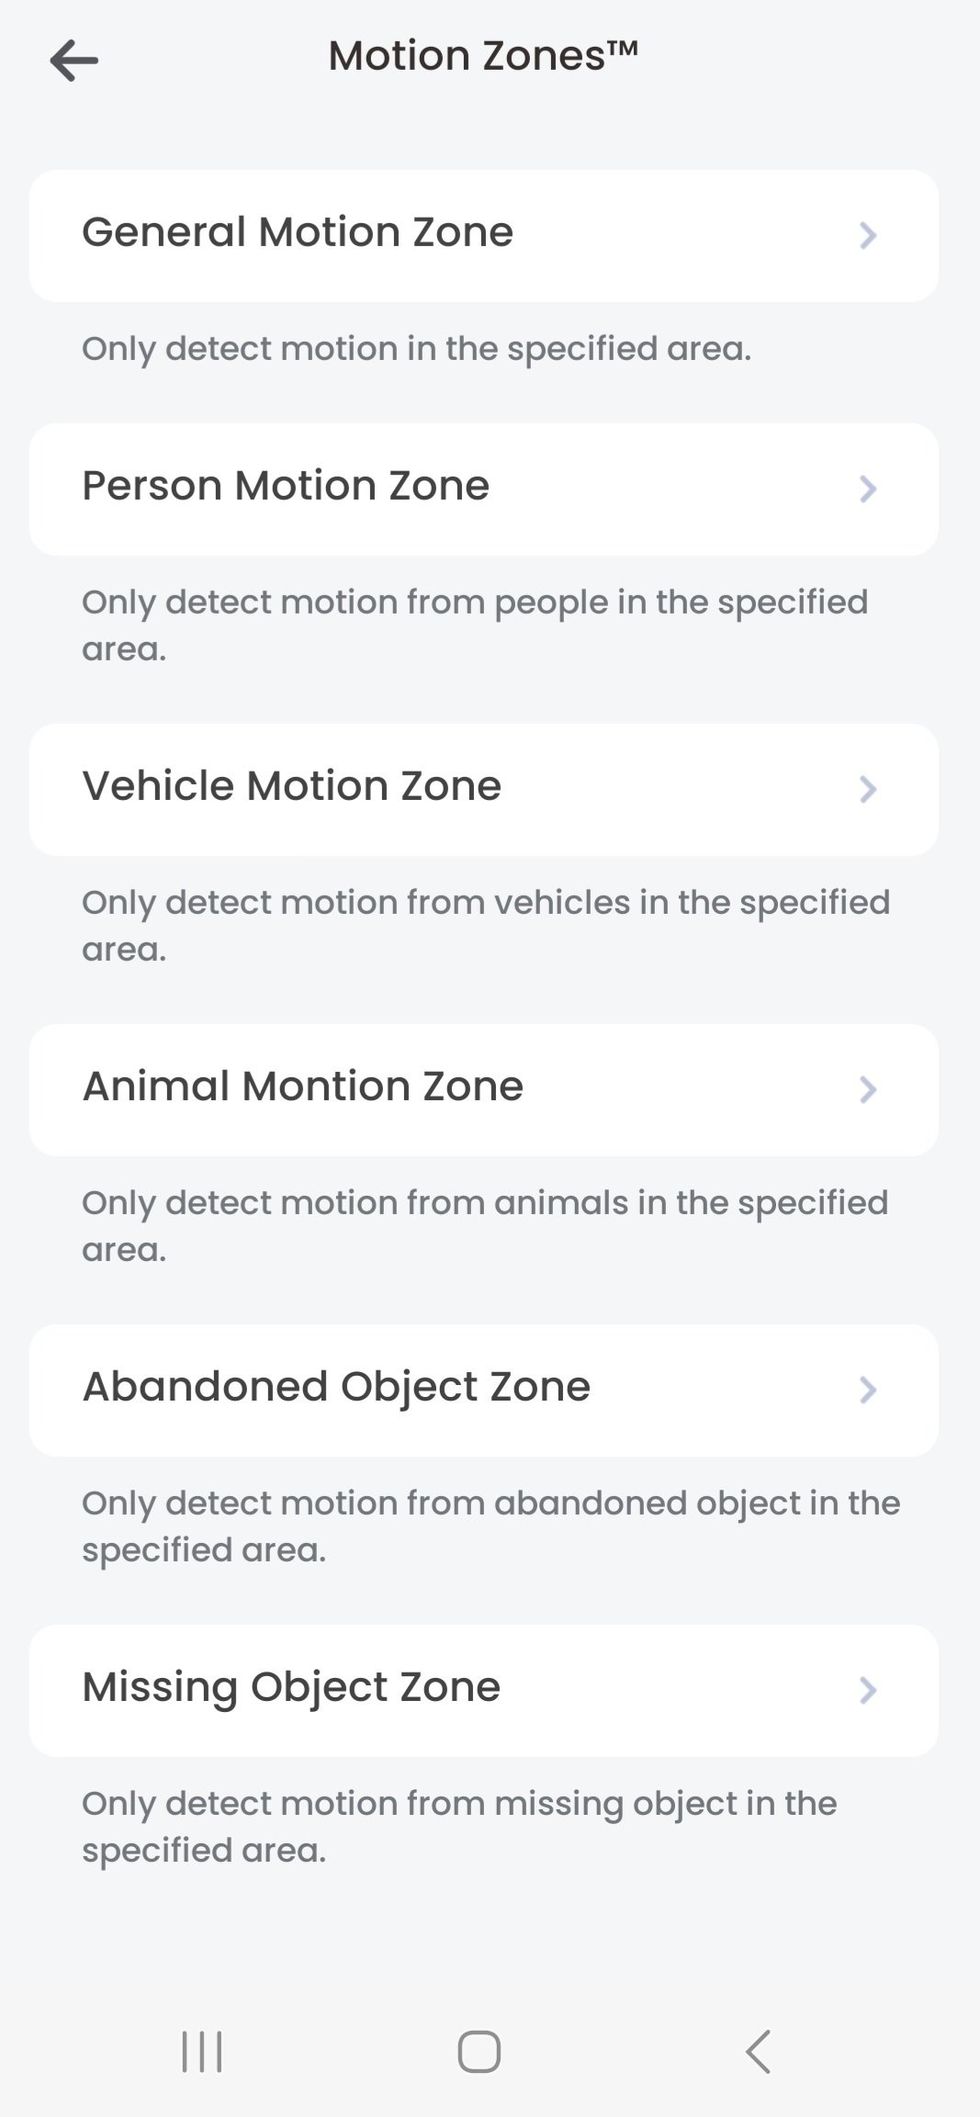 a screenshot of motion zone settings in Lorex Home app